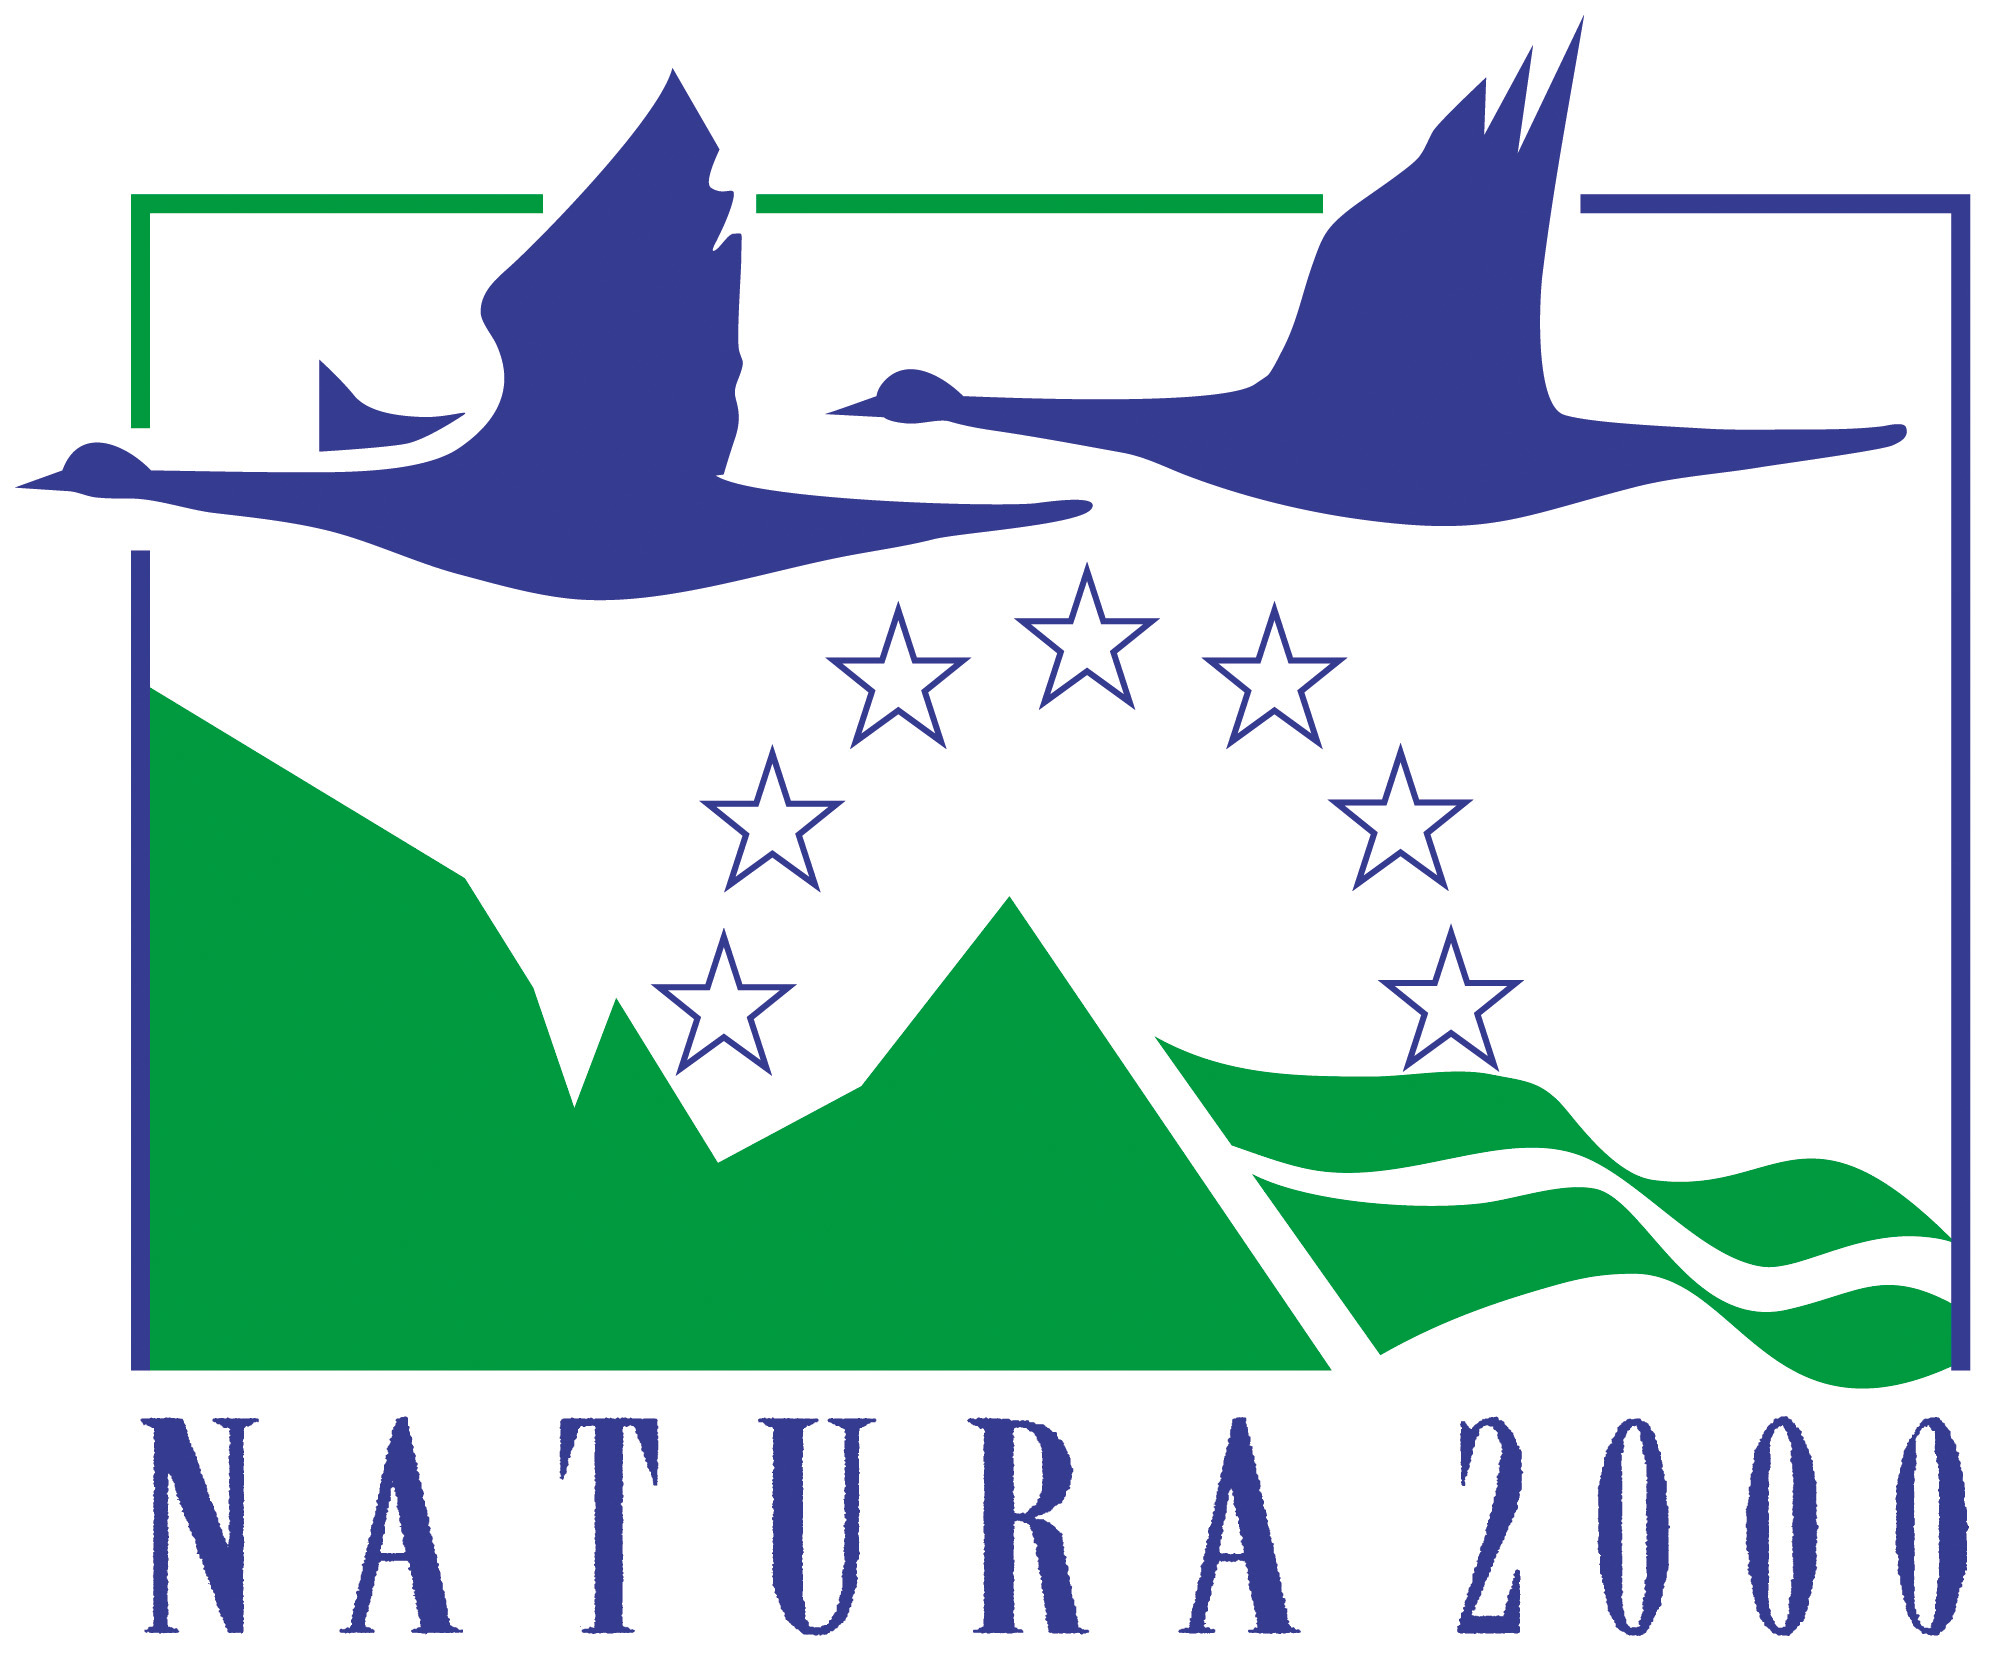 More information about "Ο νέος χάρτης των περιοχών Natura σε όλη την Ελλάδα"